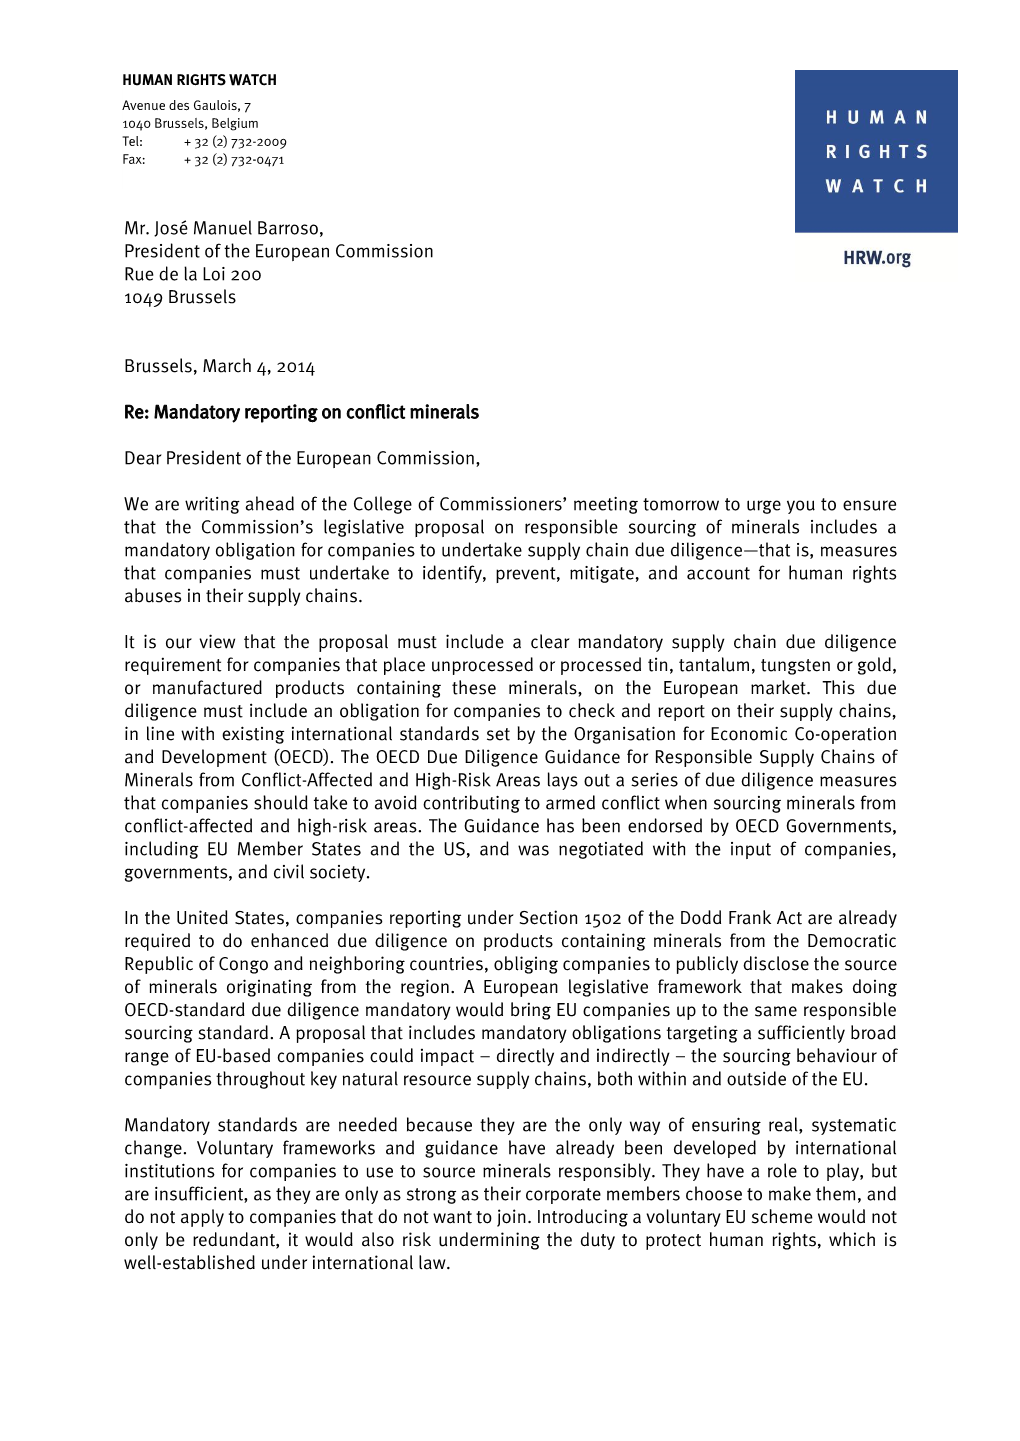 Download HRW Letter to President Barroso